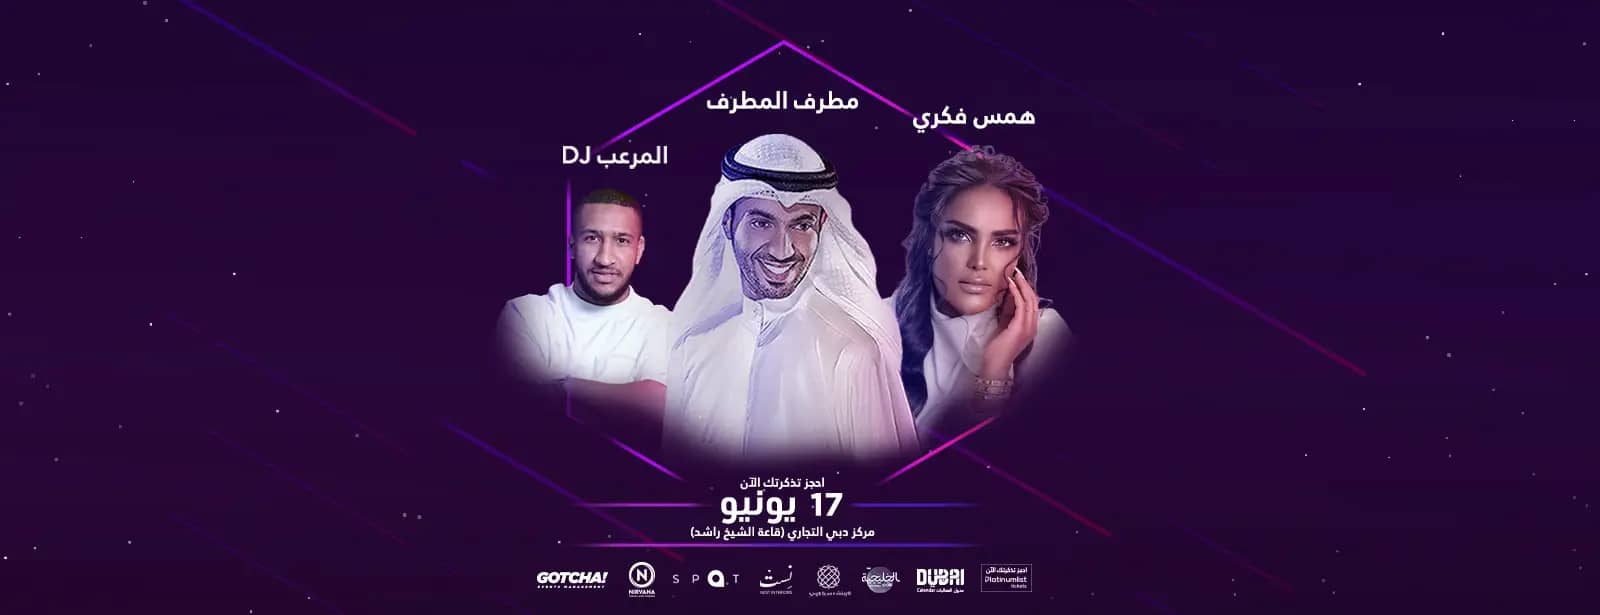 Mutref Al Mutref, Hams Fekri and DJ Moreb Live in Dubai